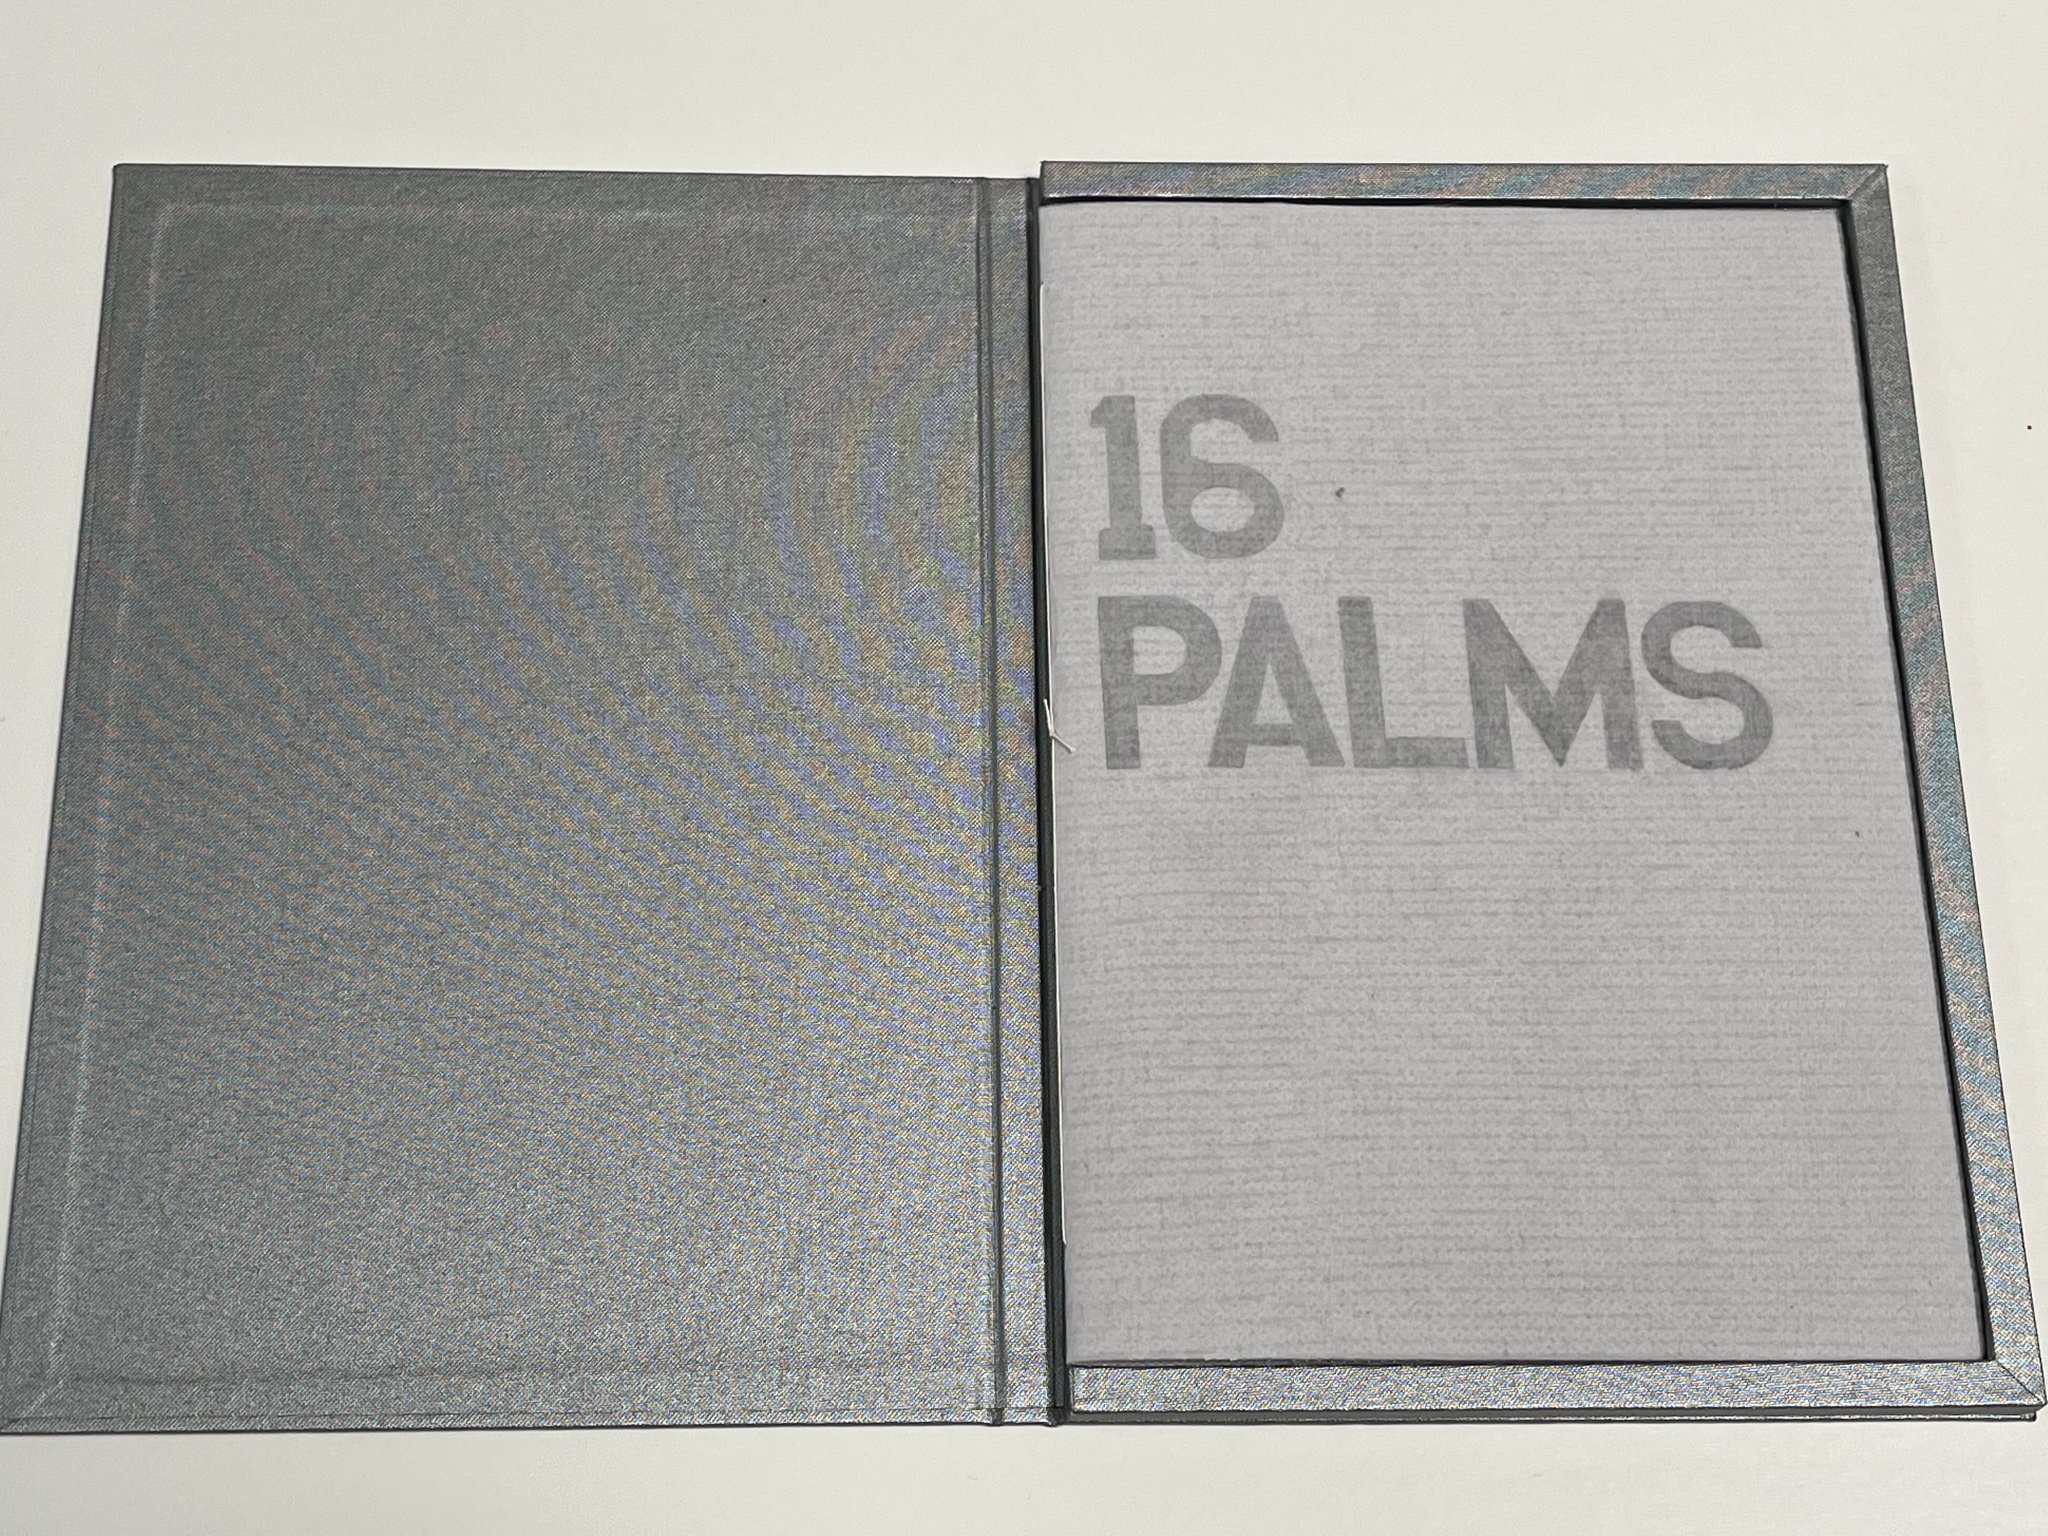 16palms-printed on organza.:sequin-13x9jpg.jpg